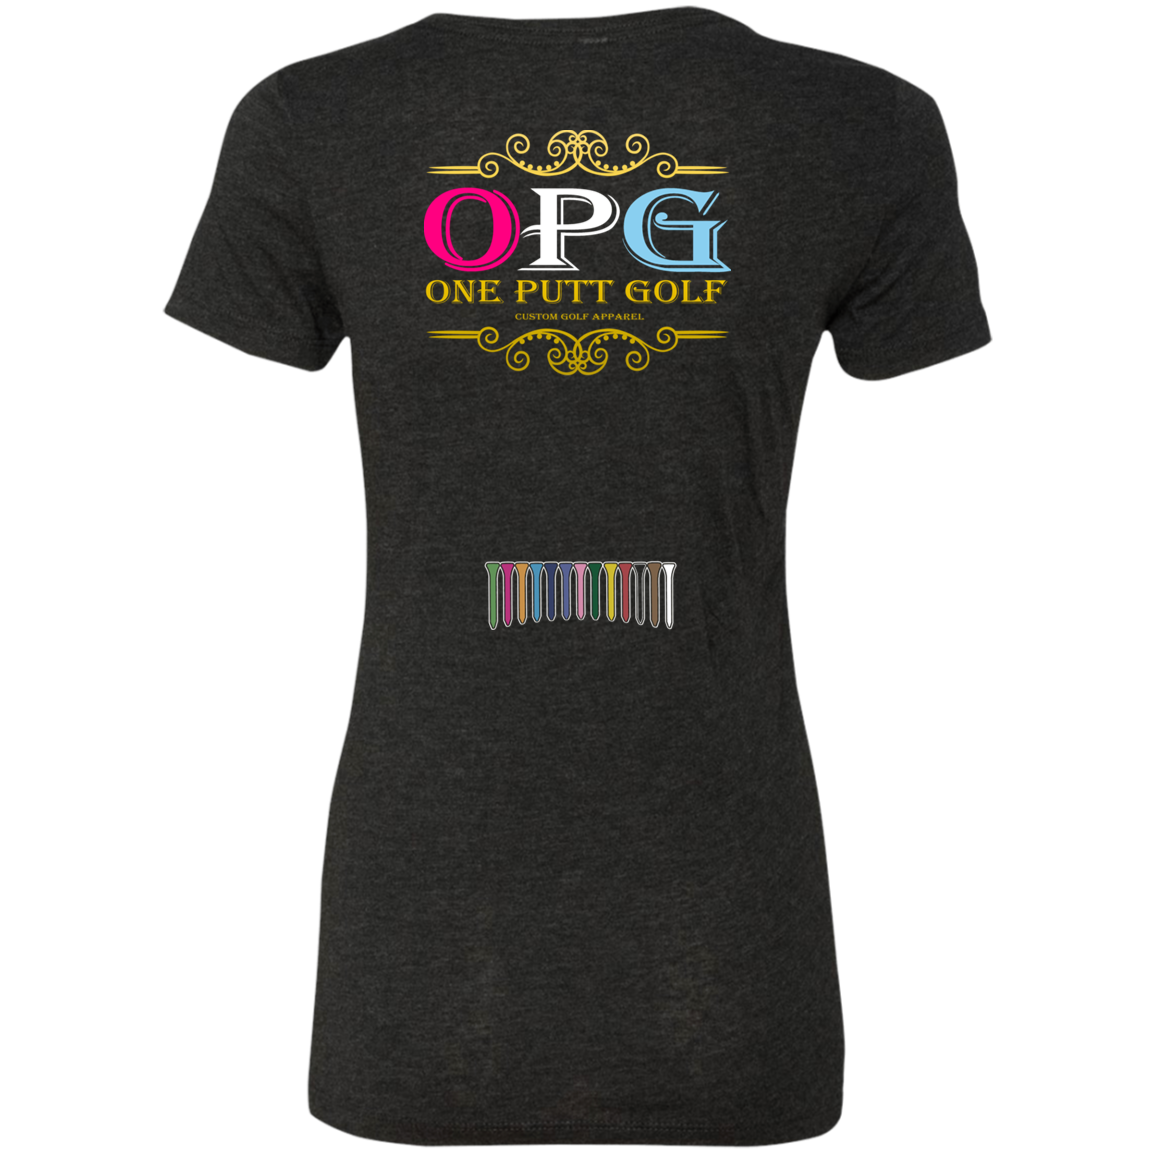 OPG Custom Design #6. Driveristee & Inclusion. Ladies' Triblend T-Shirt